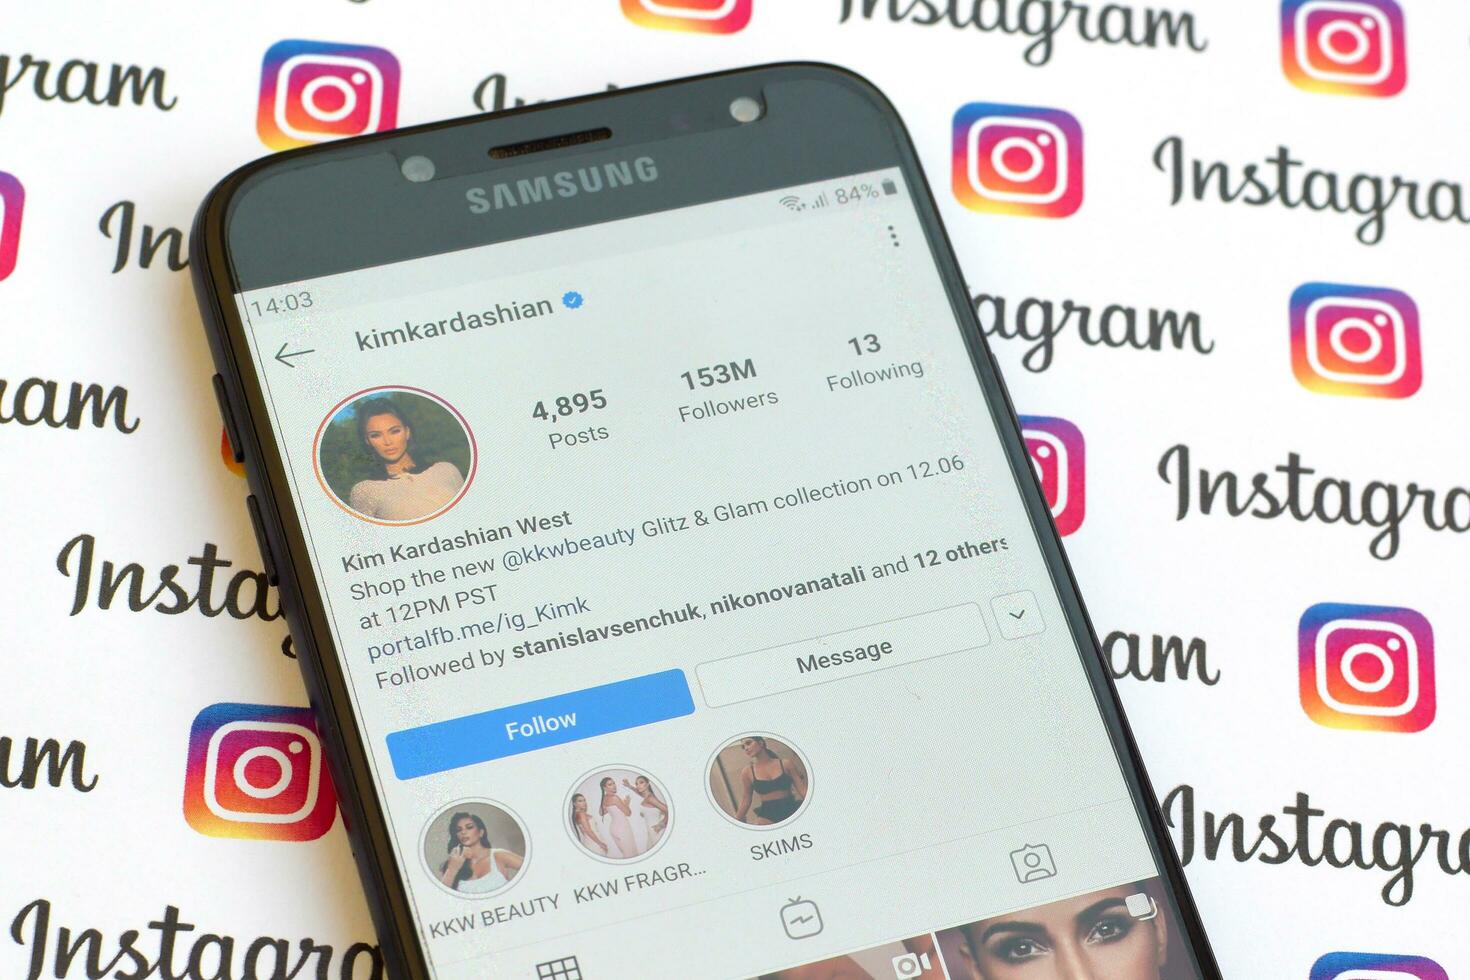 kim kardashian väst officiell Instagram konto på smartphone skärm på papper Instagram baner. foto